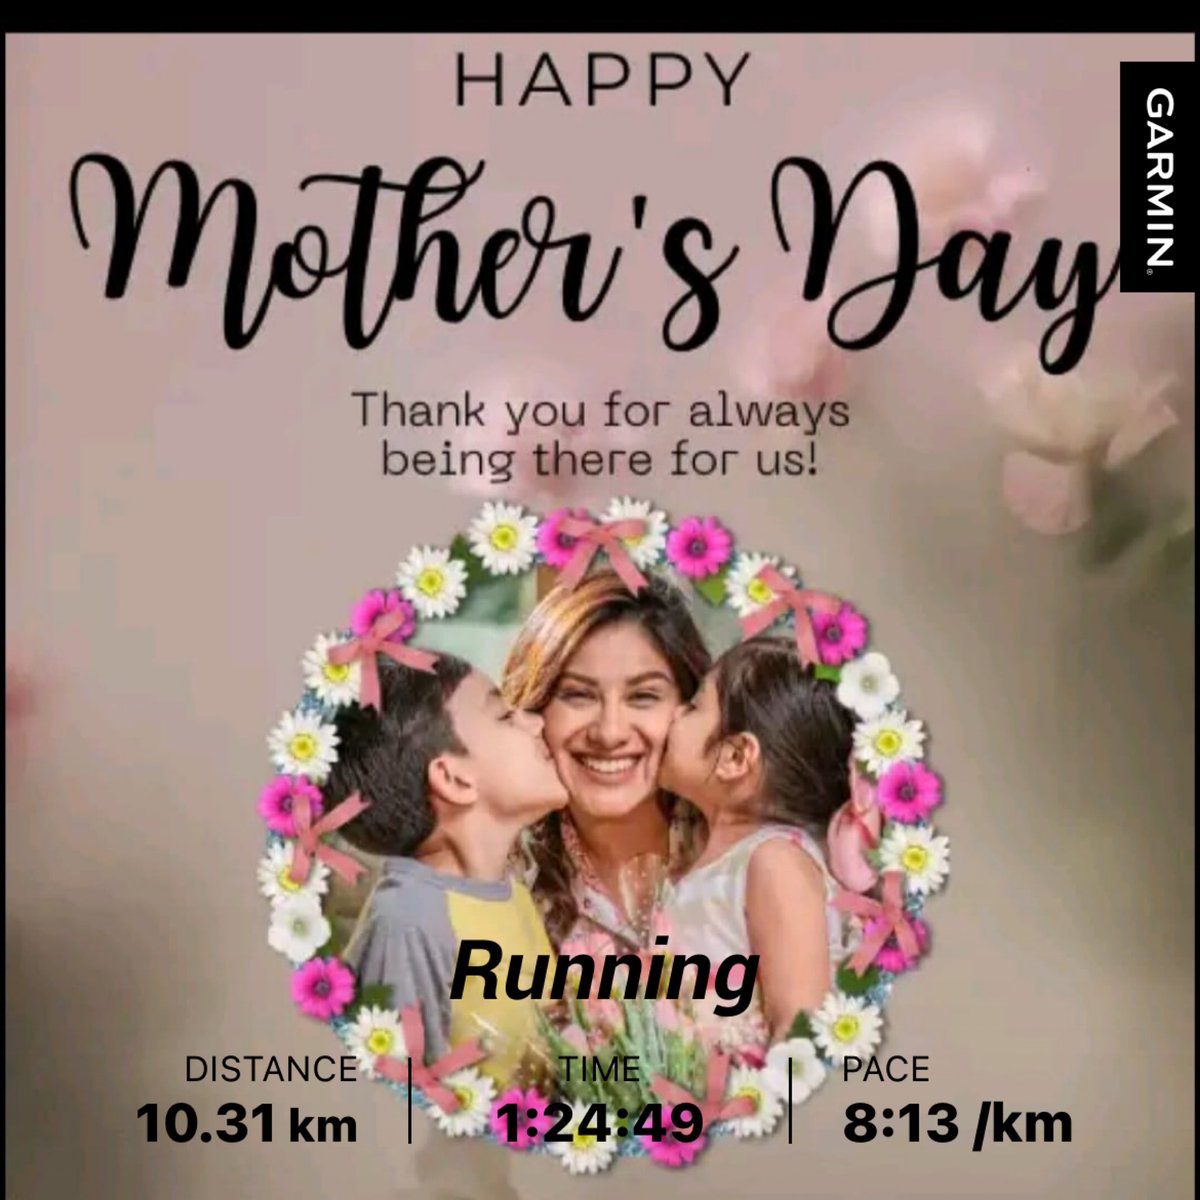 Happy Mother’s Day ❤️💙
#SkhindiGangCoaching 
#Reakitima
#TrapnLos 
#RunningWithTumiSole 
#IPaintedMyRun 
#FetchYourBody2024
#90DaysWithoutSugar